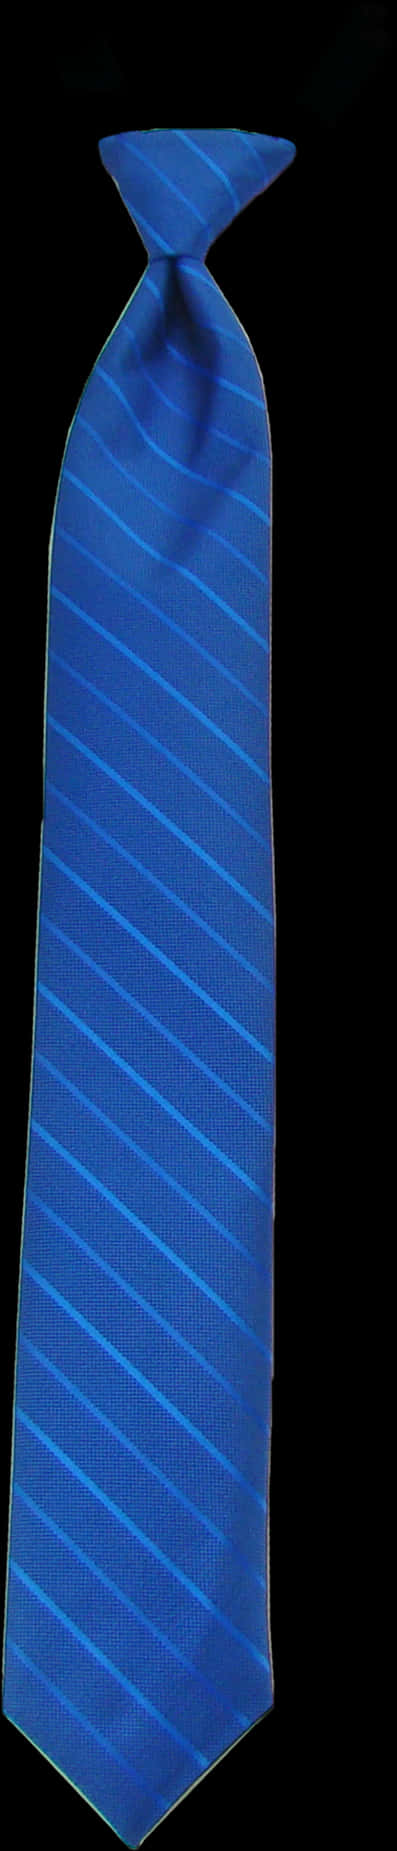 Blue Striped Necktie PNG image